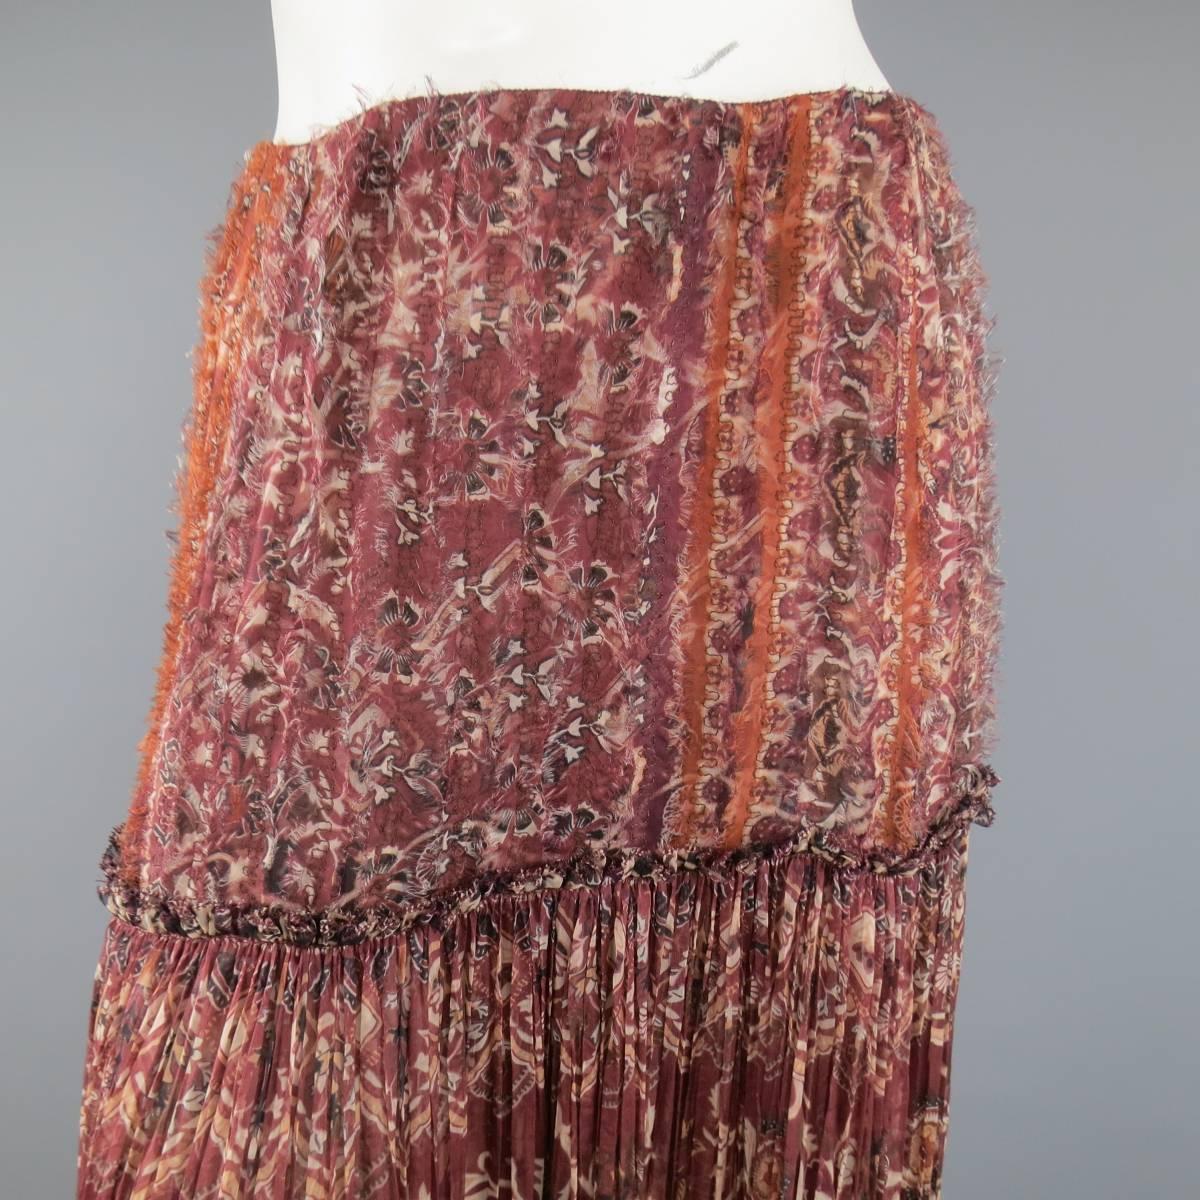 OSCAR DE LA RENTA Skirt - Size 8 Burgundy Floral Textured Silk Boho Maxi Skirt 2